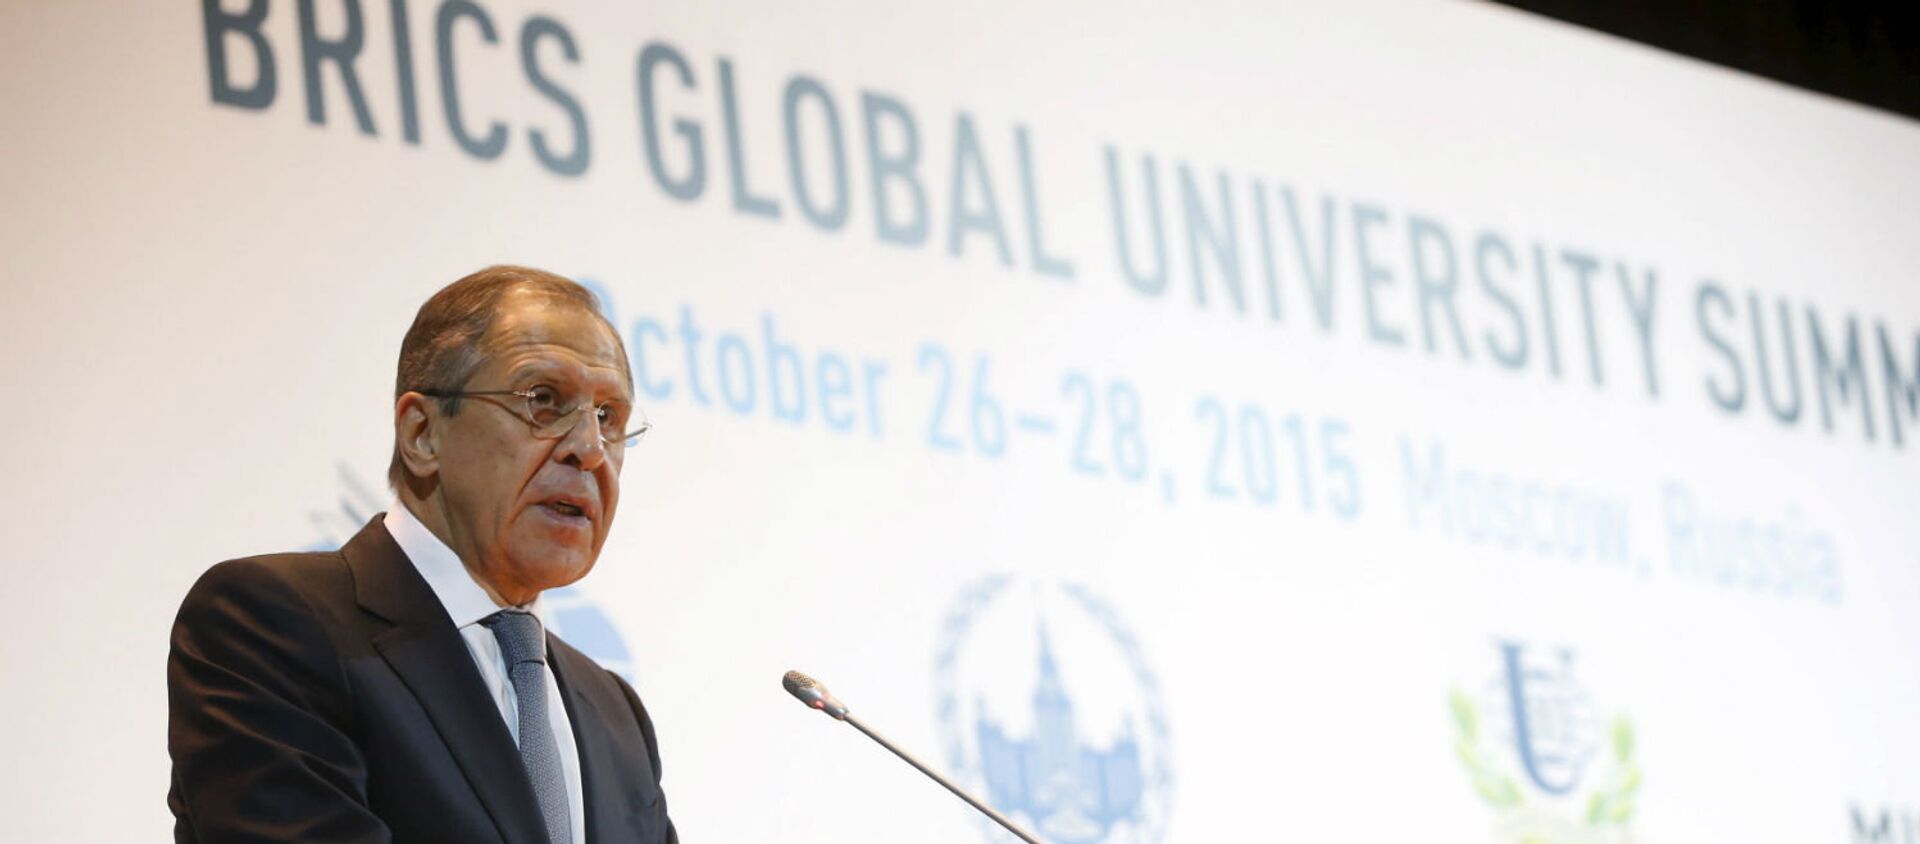 Sergei Lavrov, durante a Cúpula Global das Universidades dos BRICS. - Sputnik Brasil, 1920, 27.10.2015